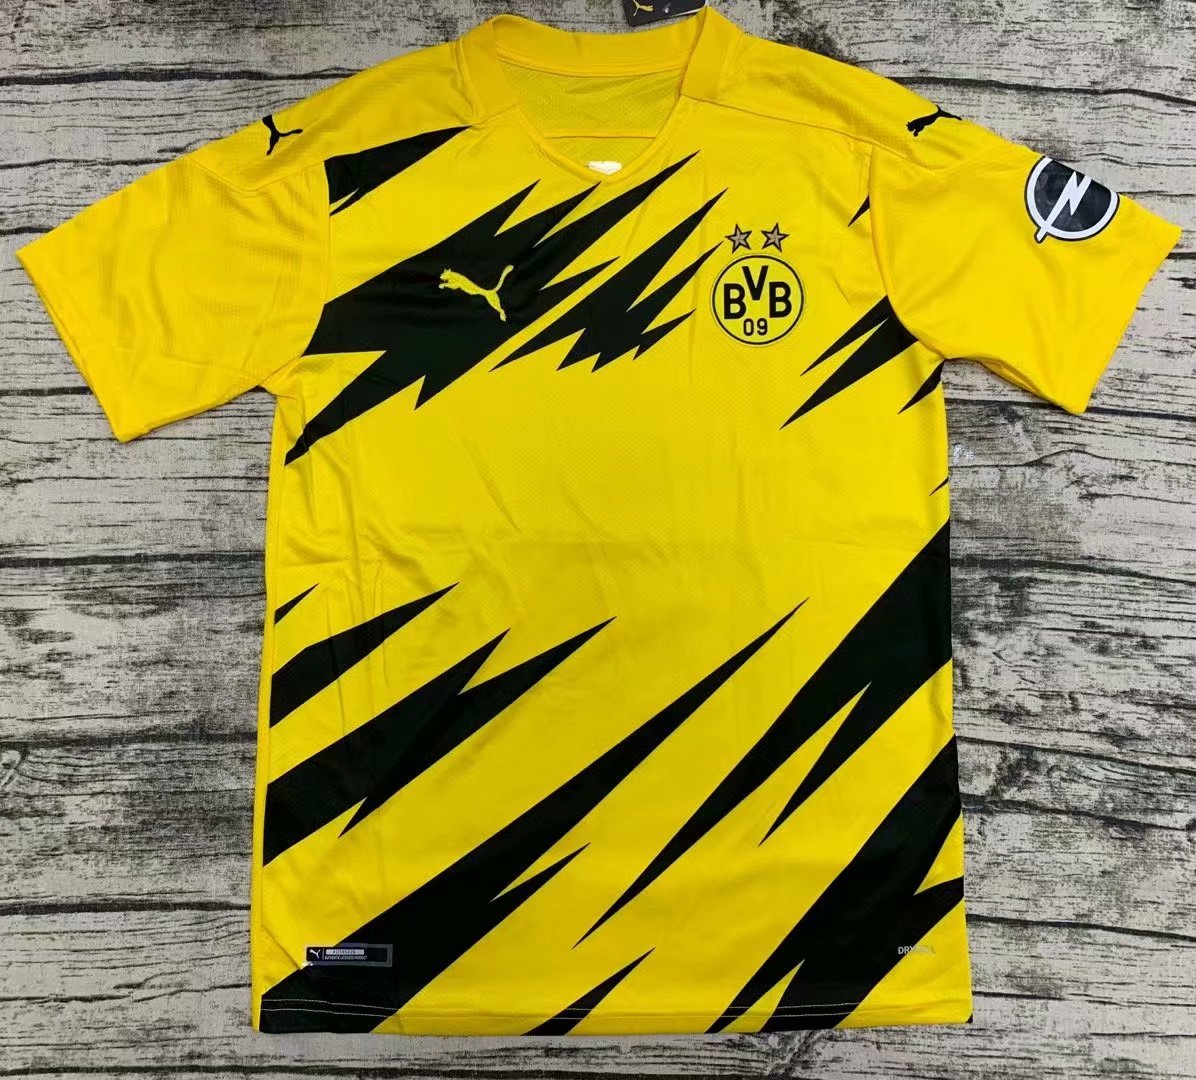 20/21 New Adult Thai version BVB Borussia Dortmund yellow ...